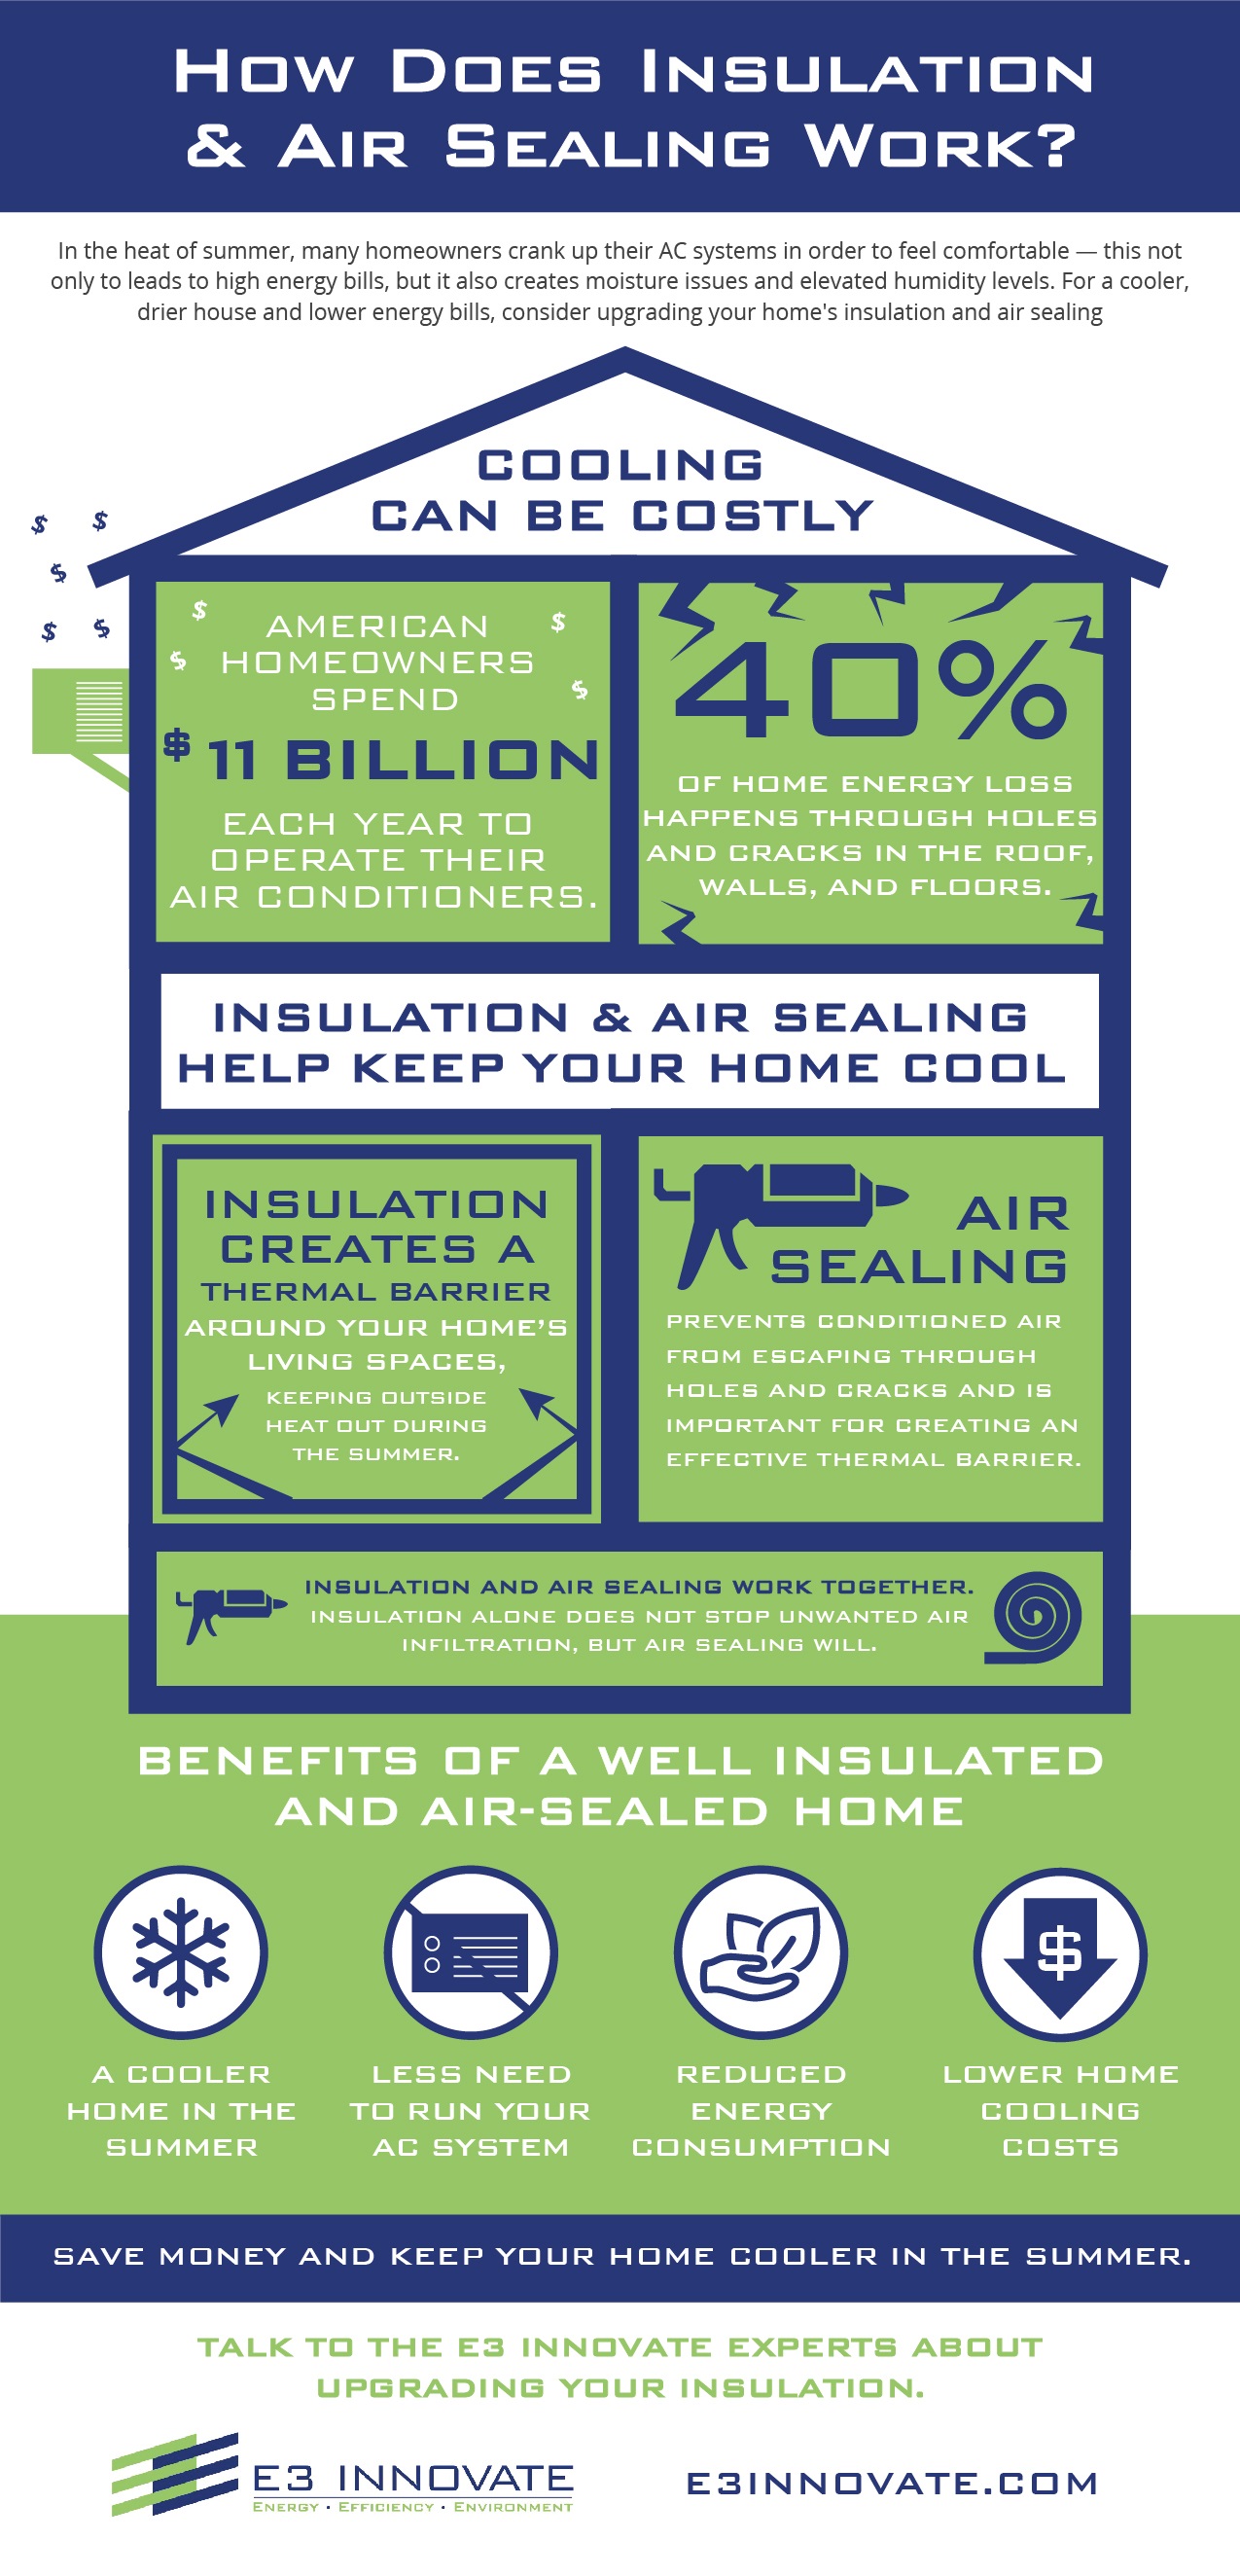 insulation, air sealing, home performance, E3 INNOVATE